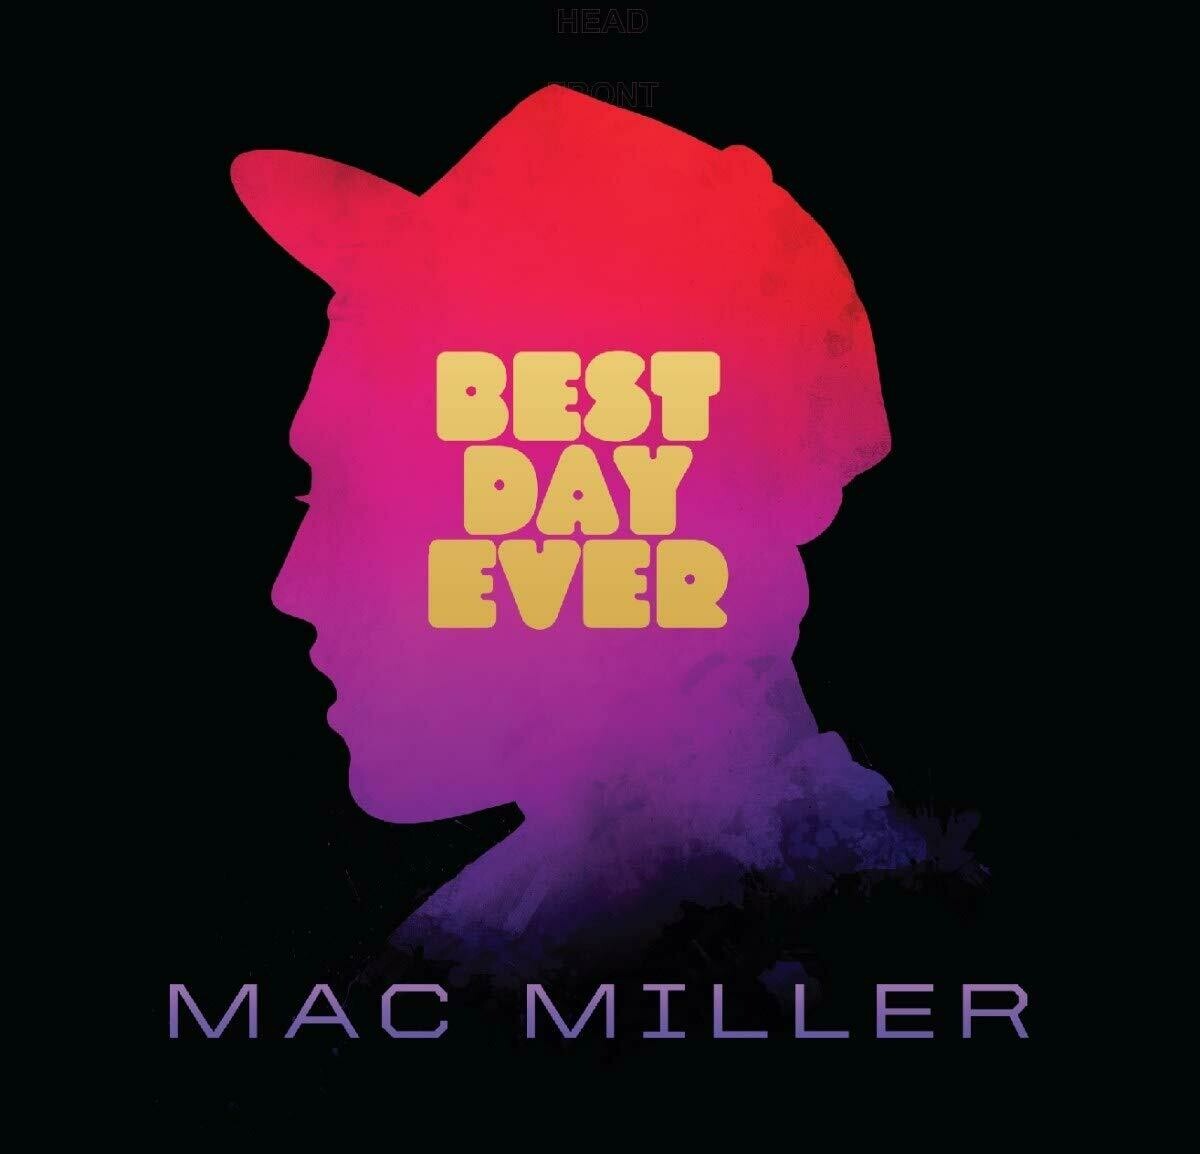 Mac Miller "Best Day Ever"